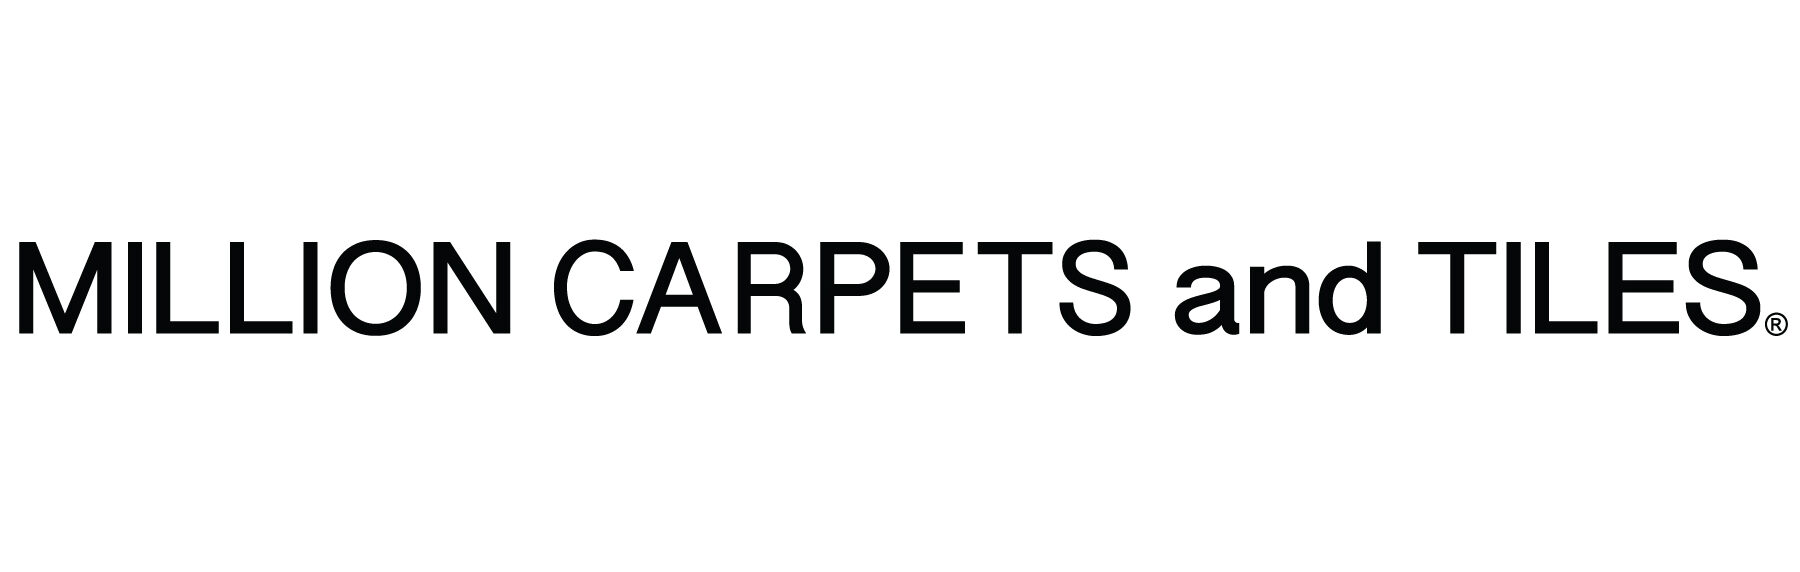 Million carpets and Tiles-02